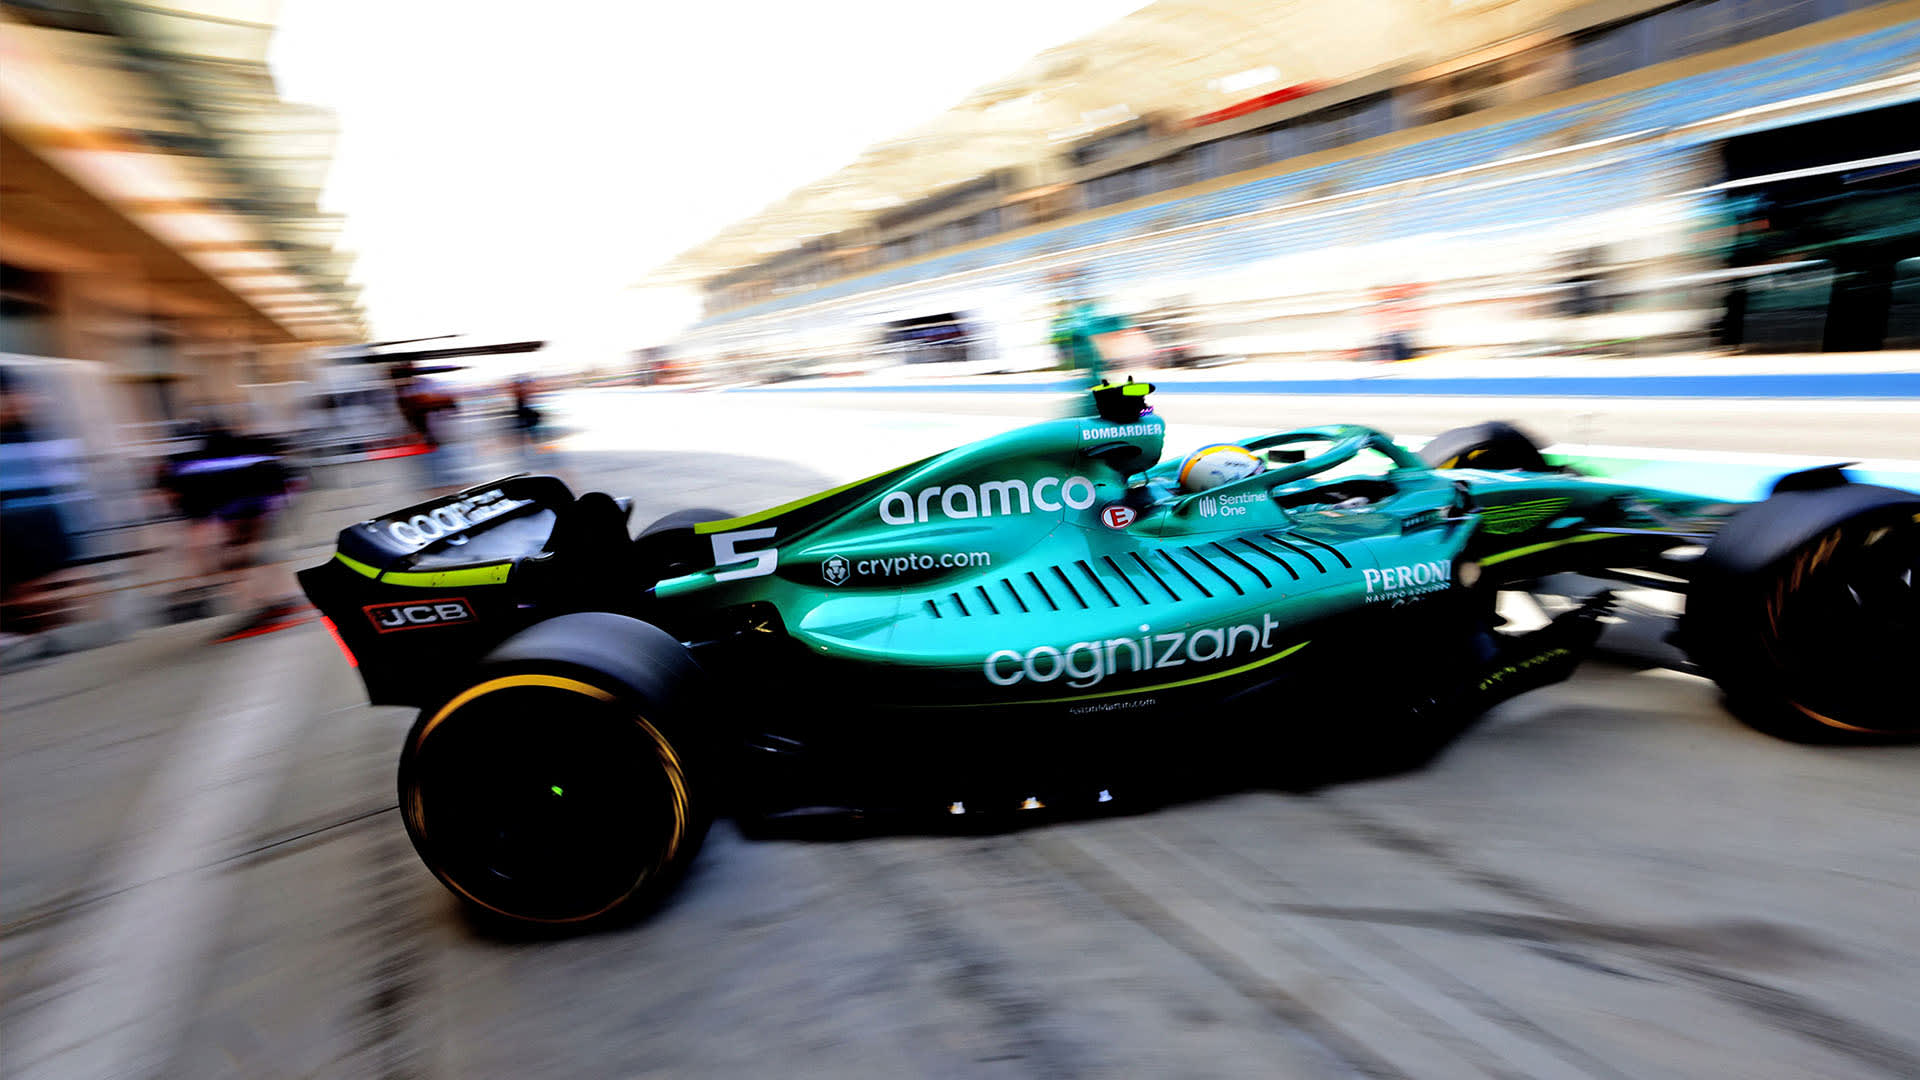 LIVE COVERAGE - Formula 1 Aramco Pre-Season Testing 2022